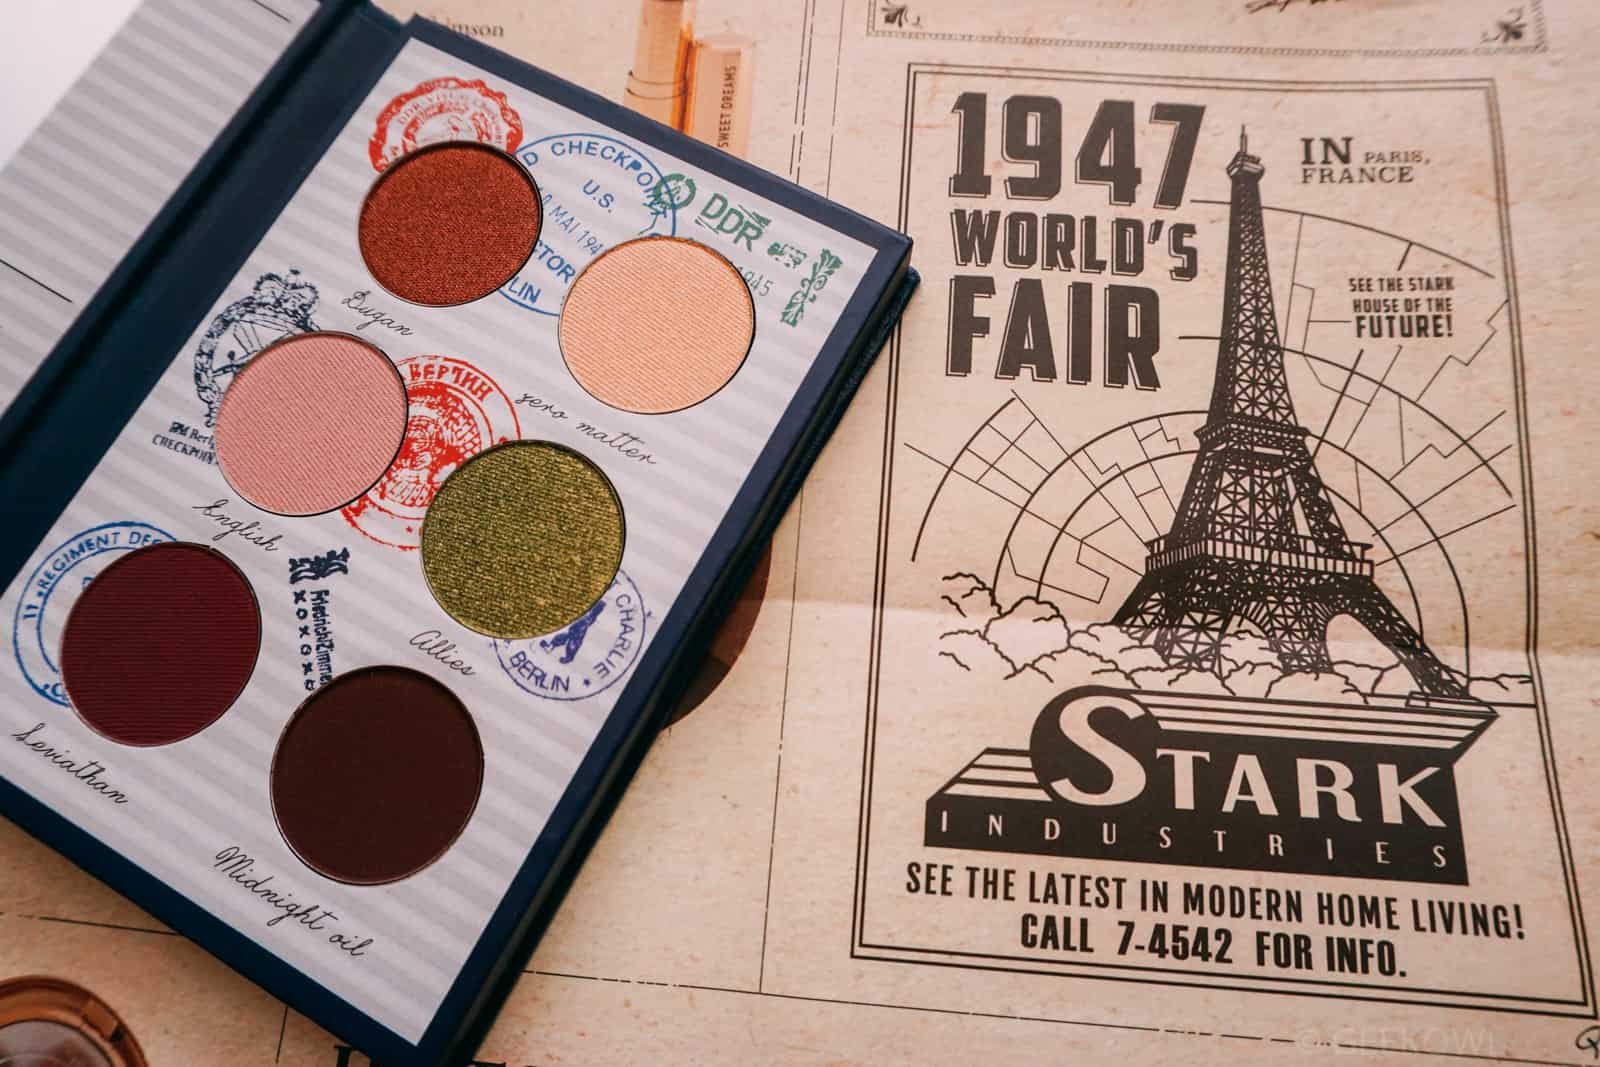 opened agent carter palette on the besame newsletter featuring stark world fair 1947